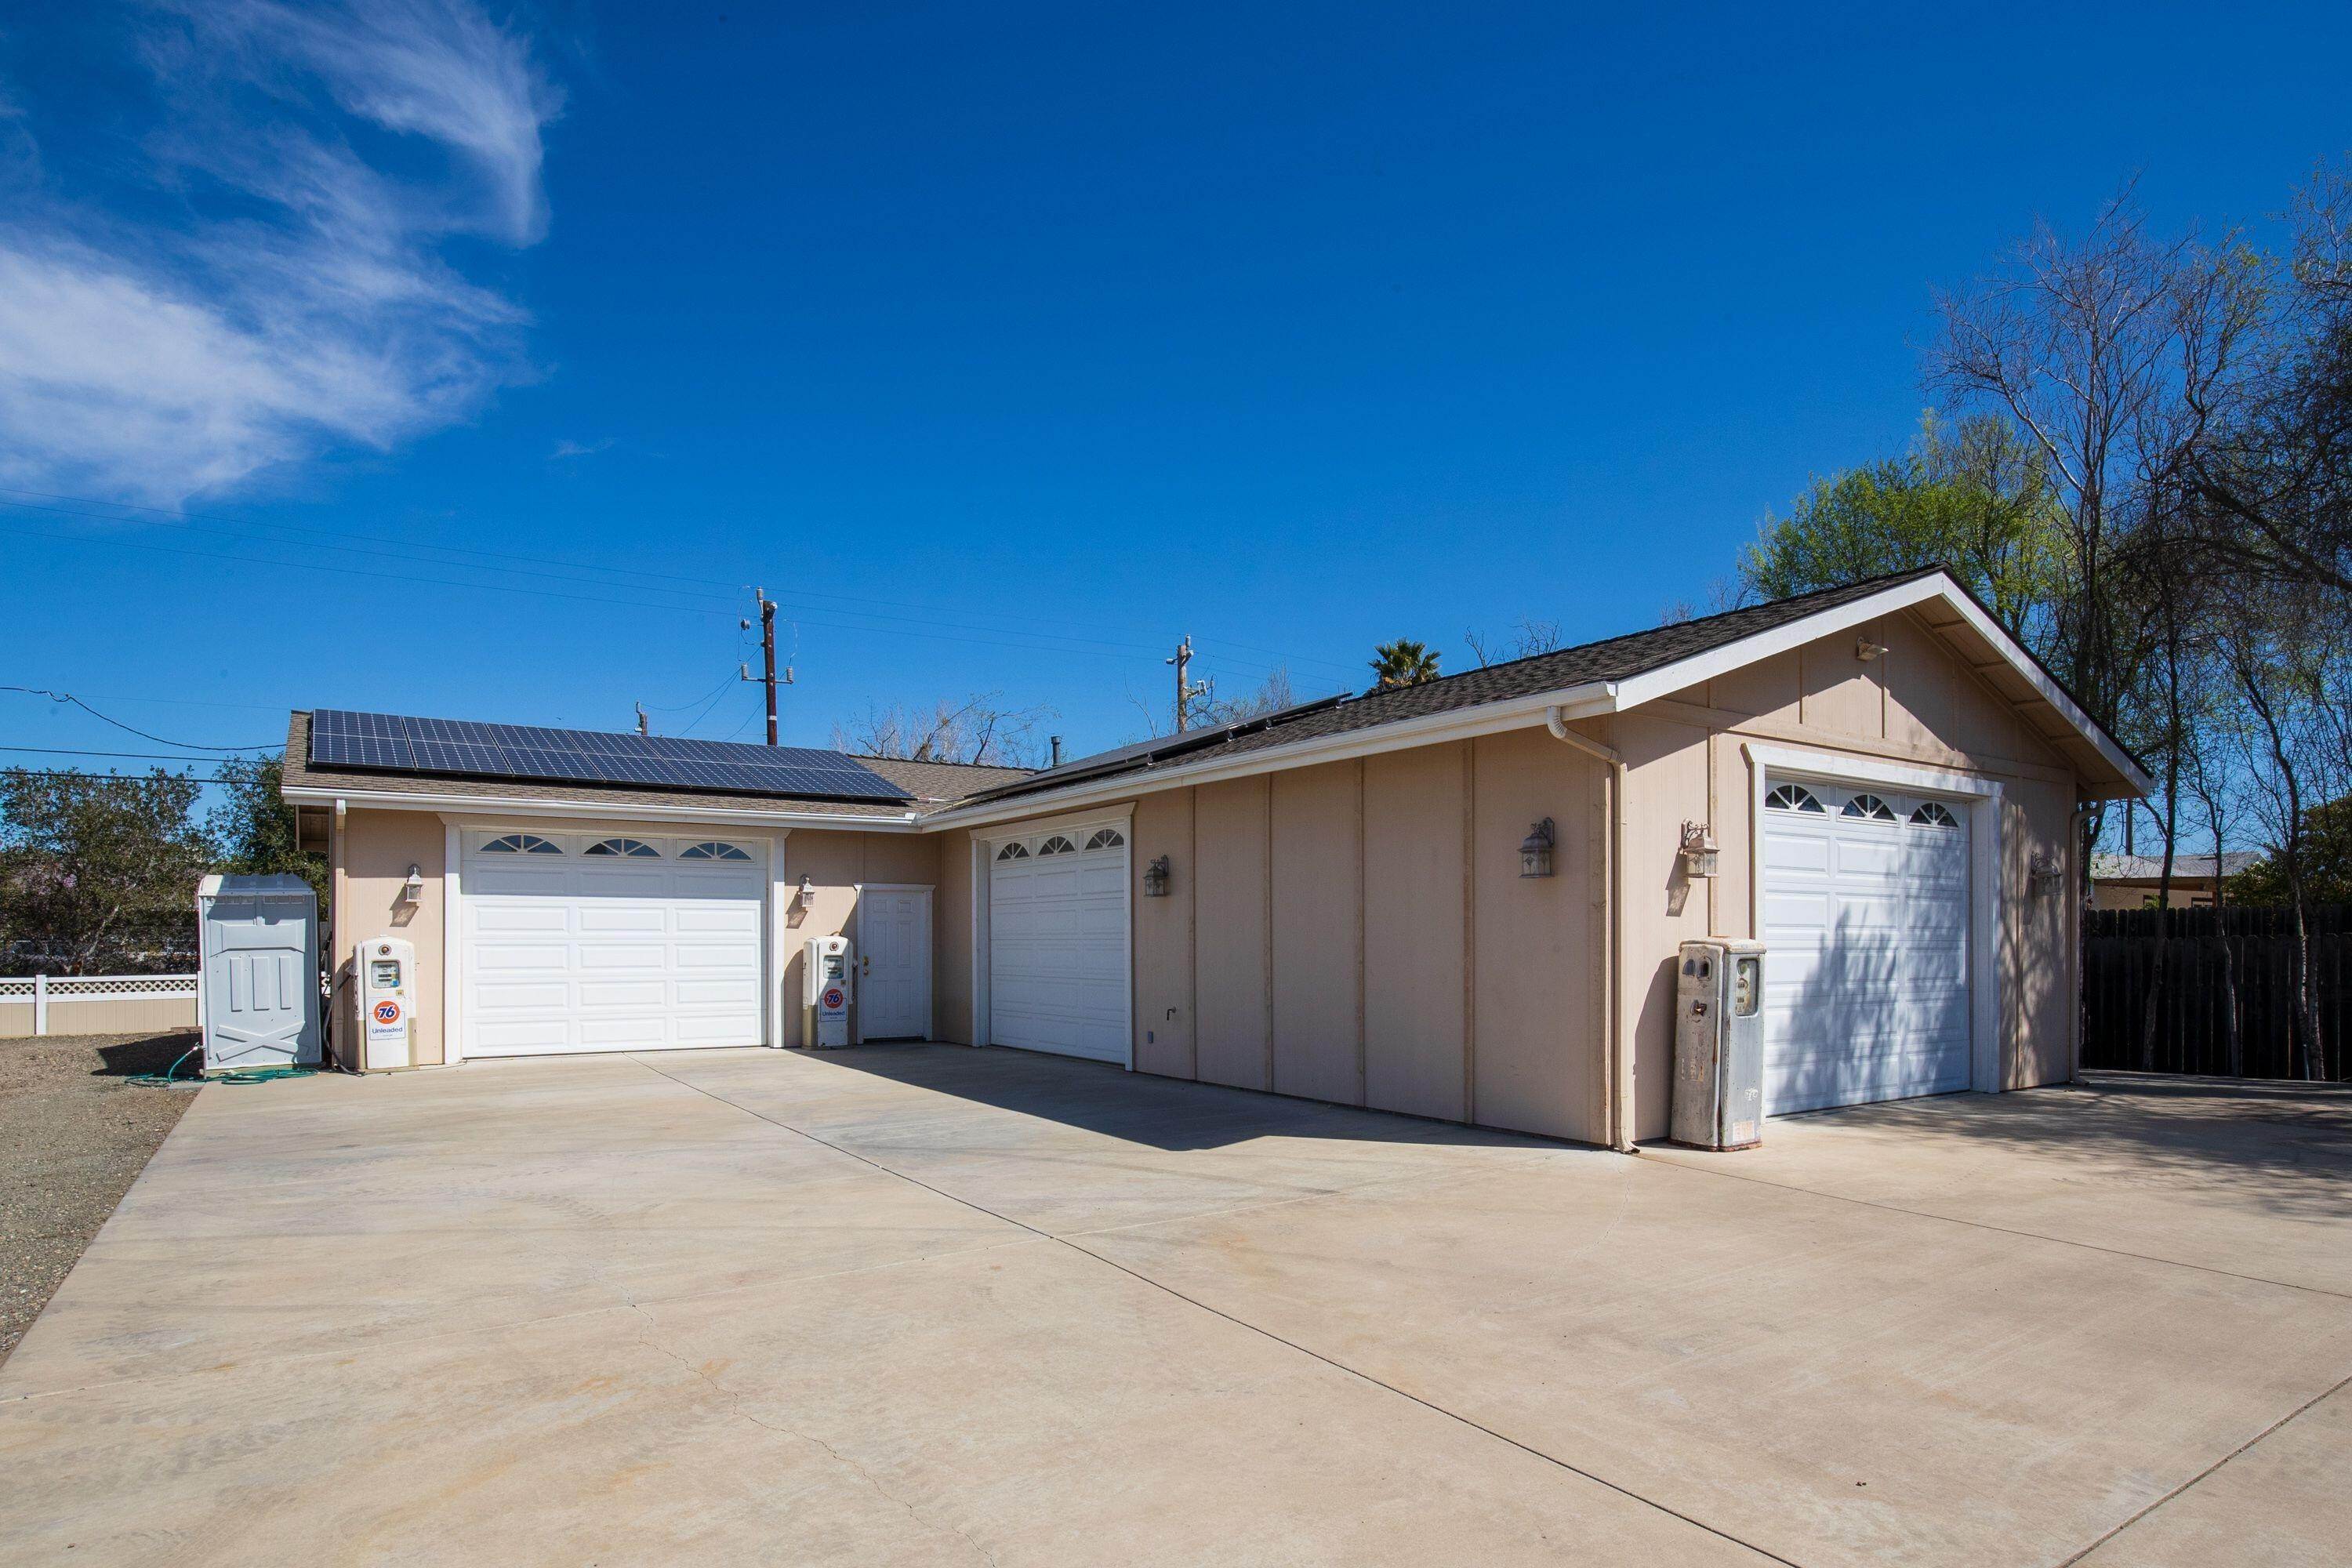 32. Estate for Sale at 2899 Buckboard Lane Solvang, California 93463 United States